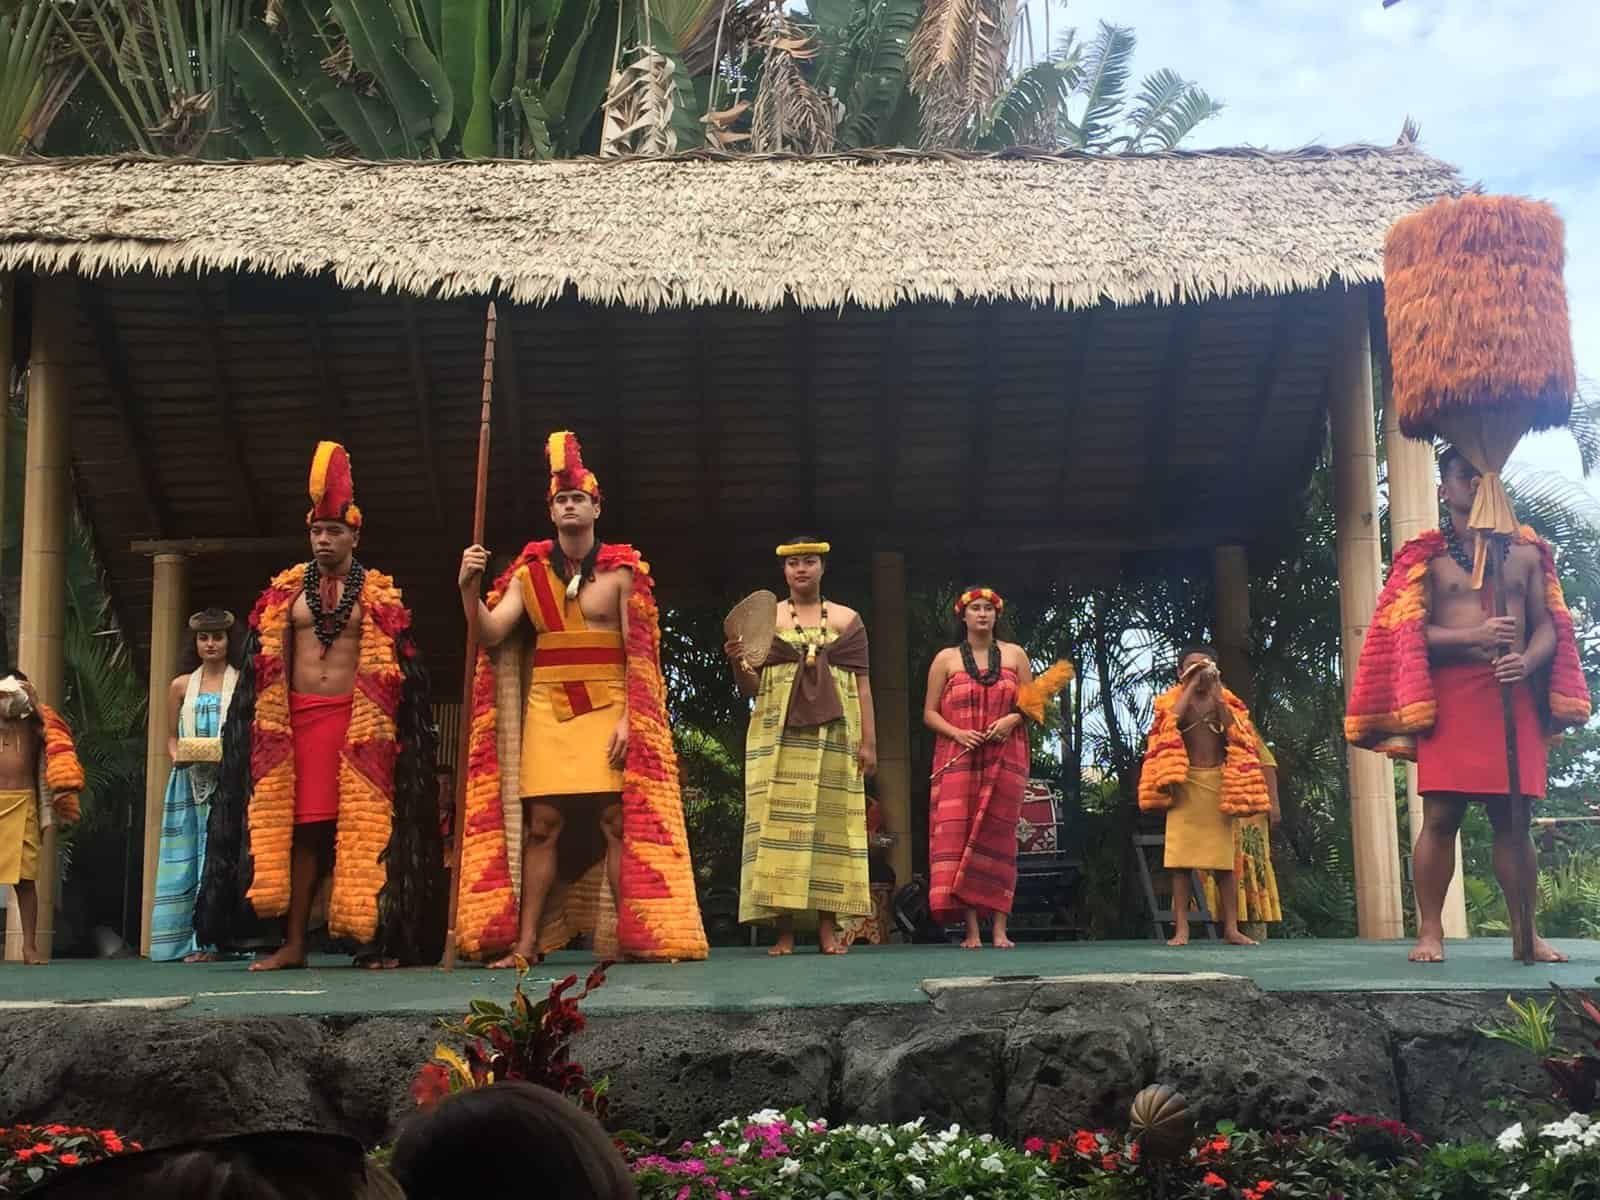 luau show at Polynesian Cultural Center, Oahu, Hawaii